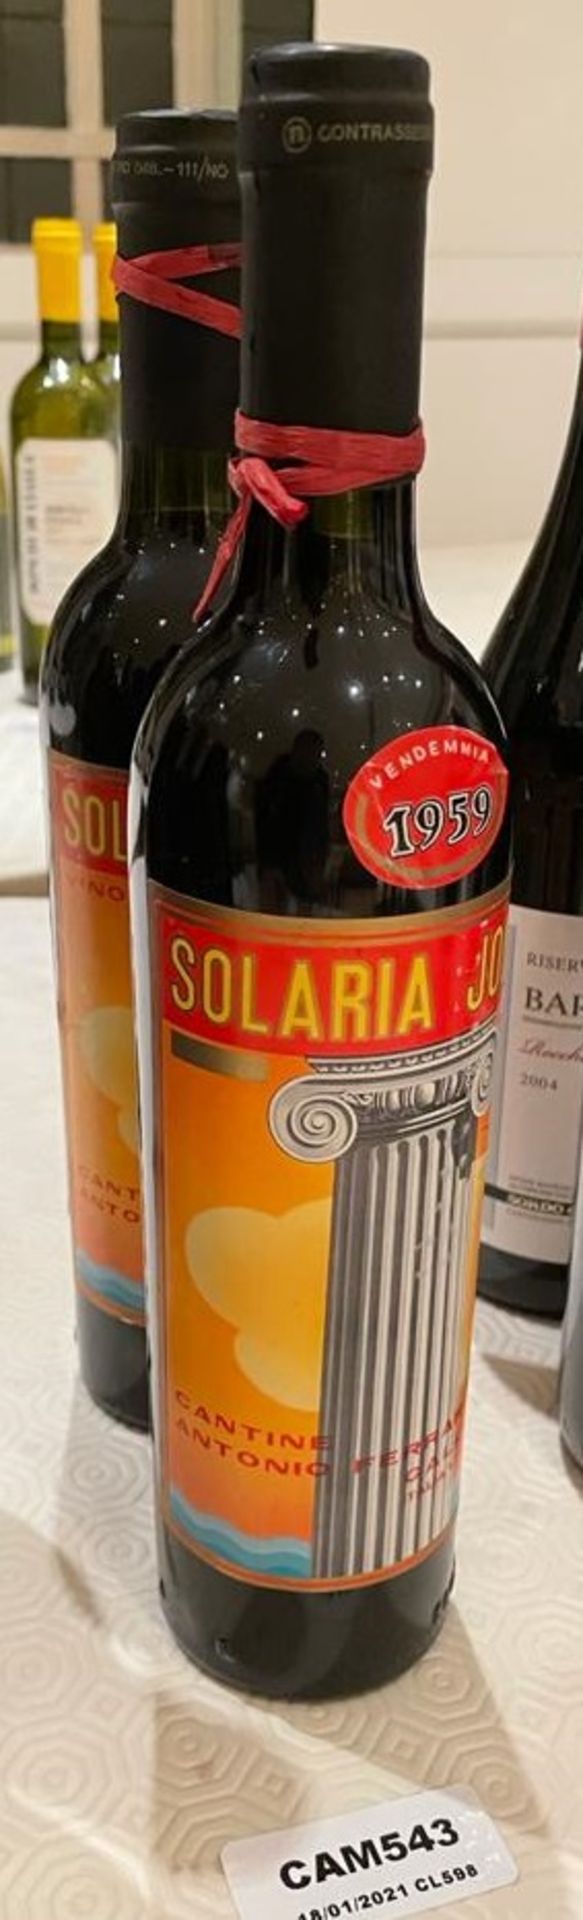 2 x Bottles Of SOLARIA JONICA CALLANTE VENDEMMIA 1959 PIEMONTE - 75cl New/Unopened Restaurant Stock - Image 4 of 4